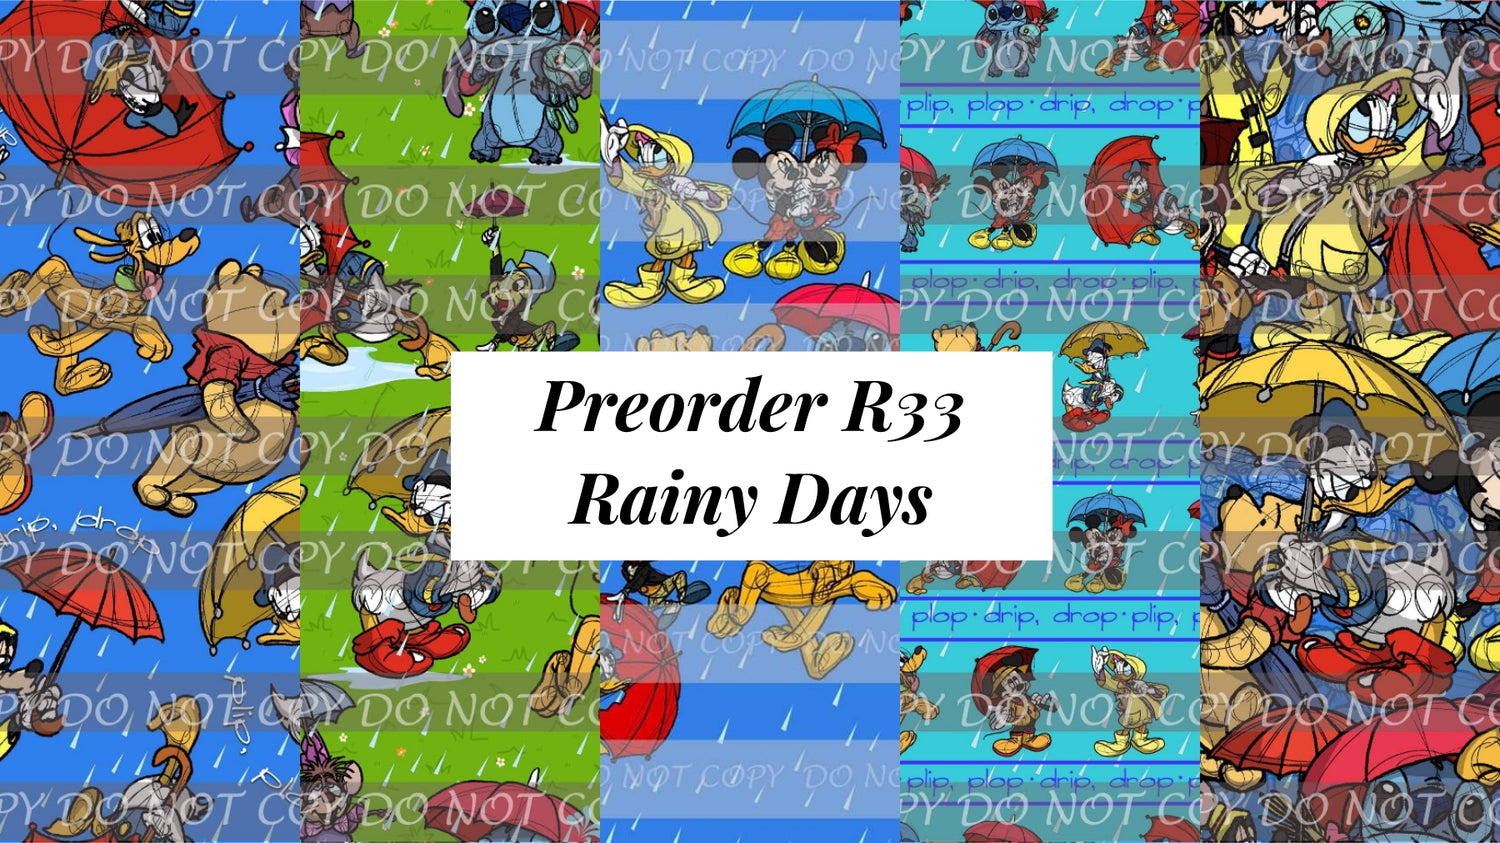 Preorder R33 Rainy Days